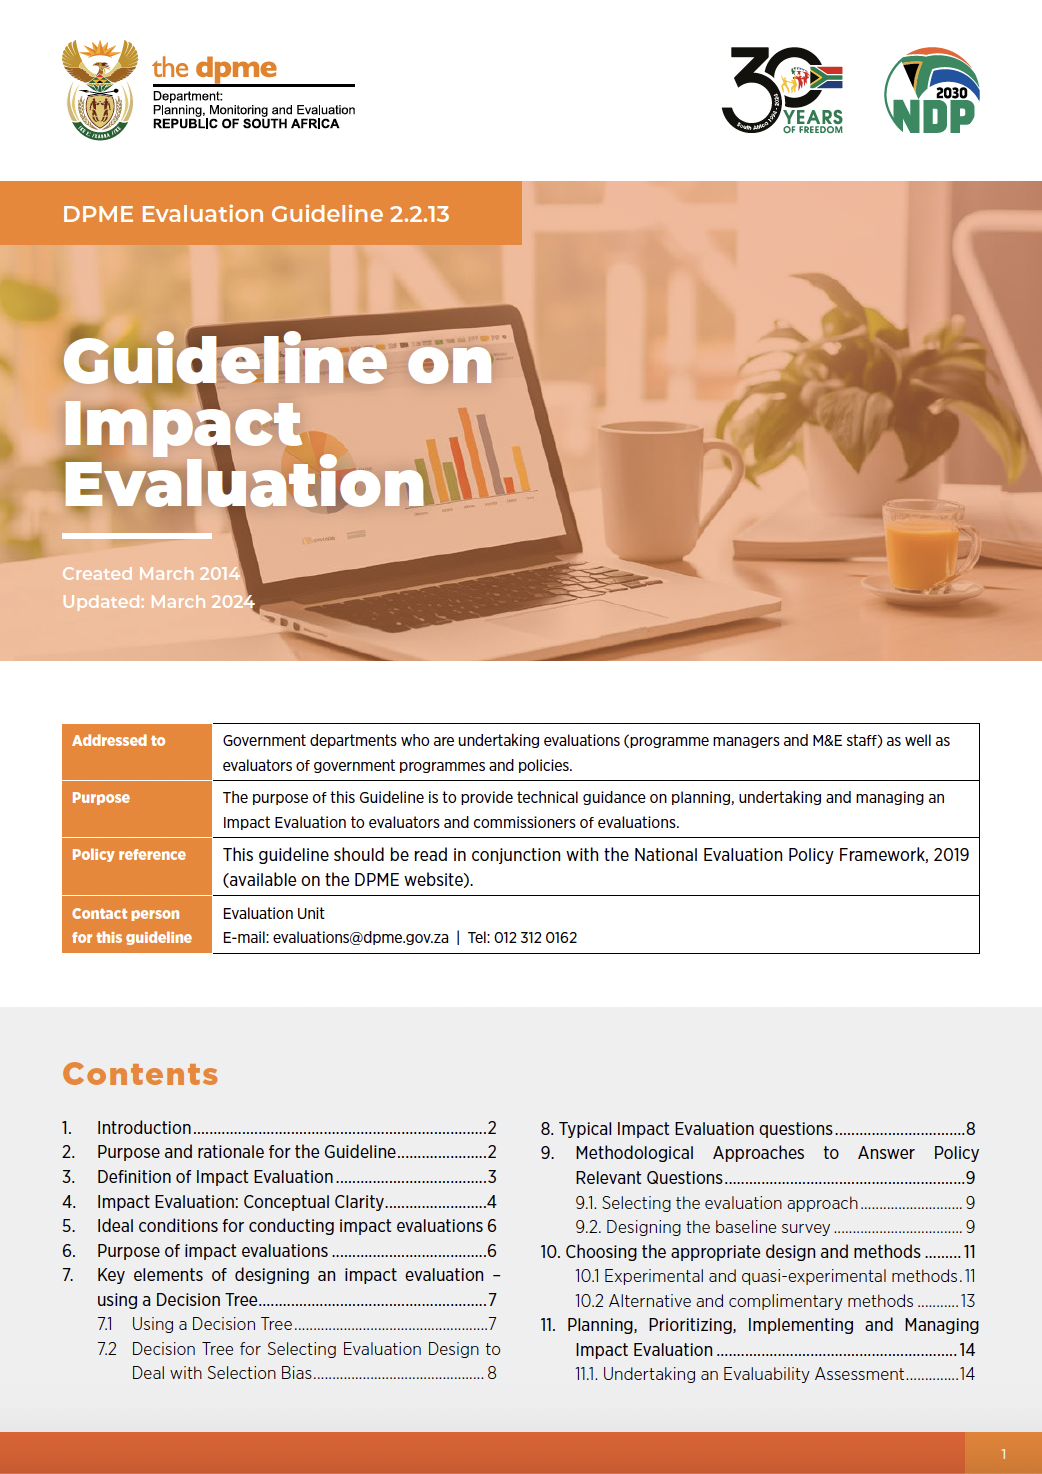 DPME Impact Evaluation Guideline